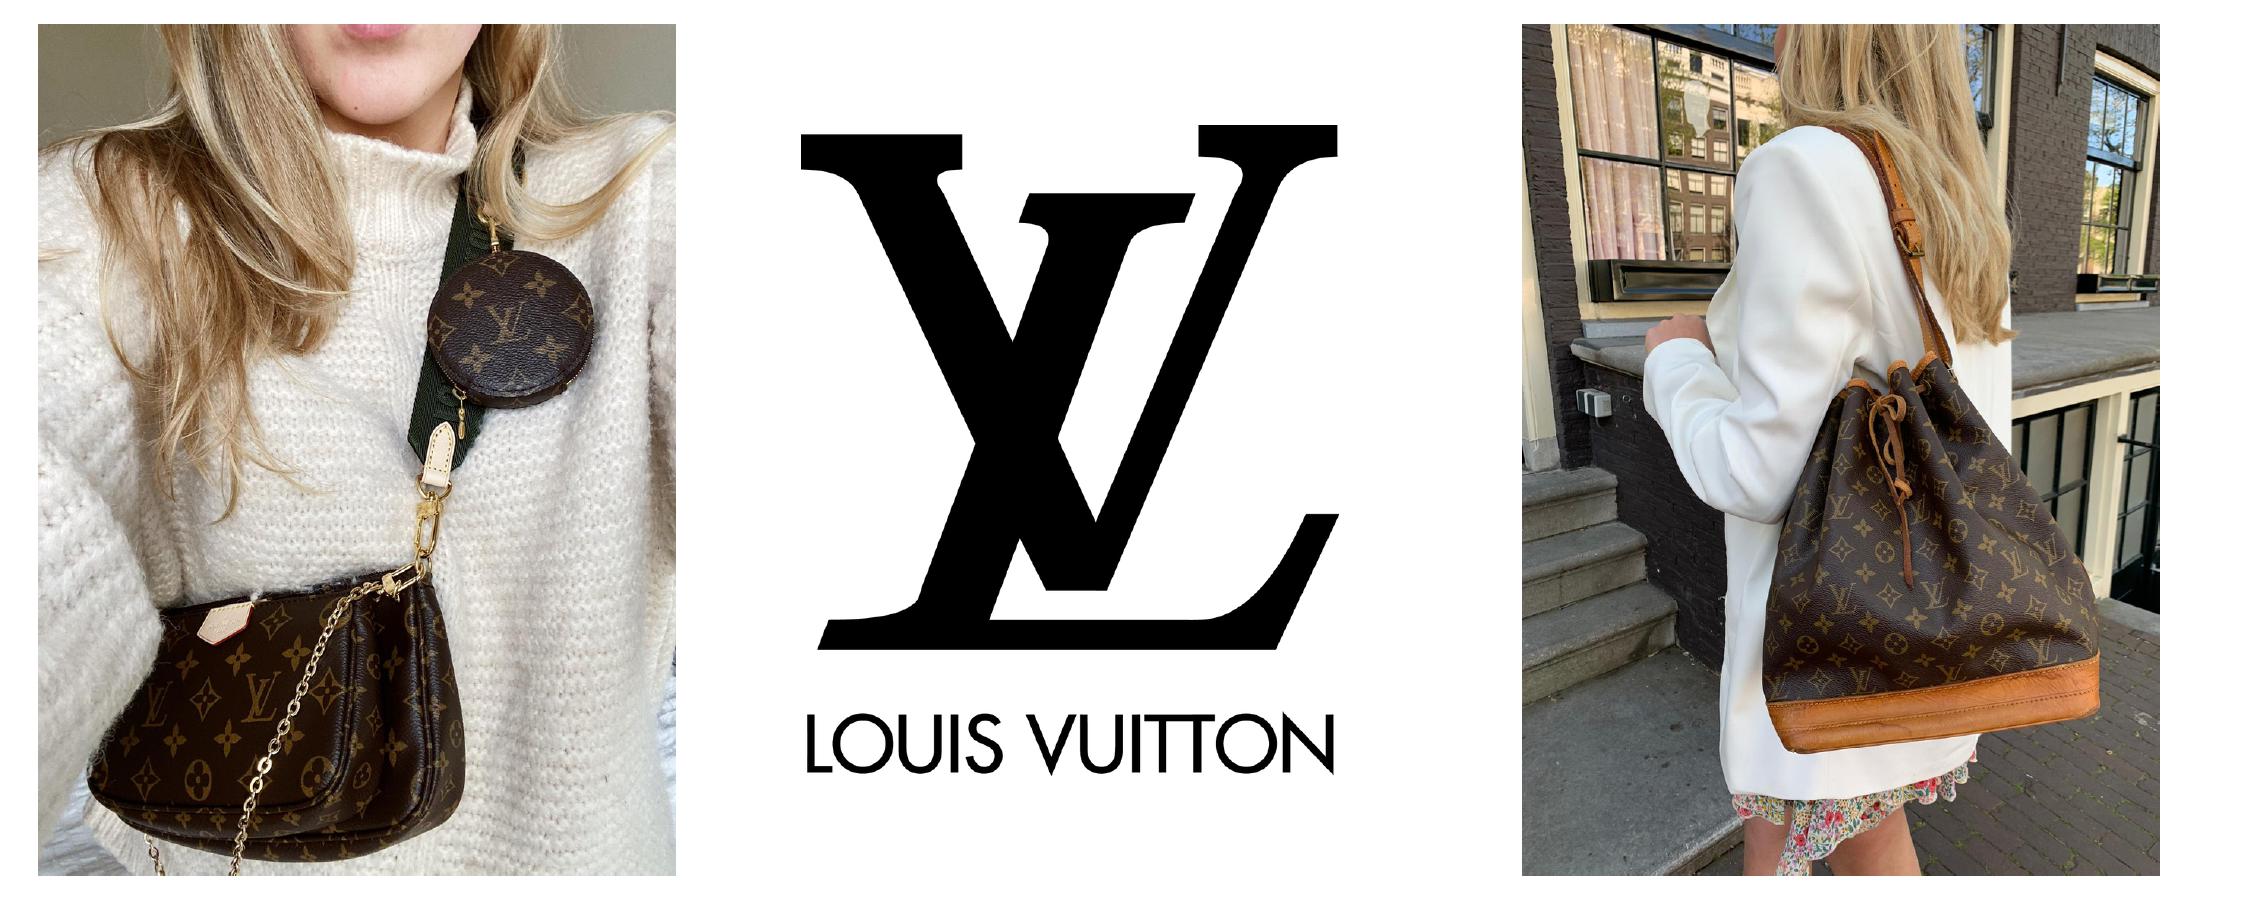 Louis Vuitton Preiserhöhung 2021: Die neuen Preise – l'Étoile de